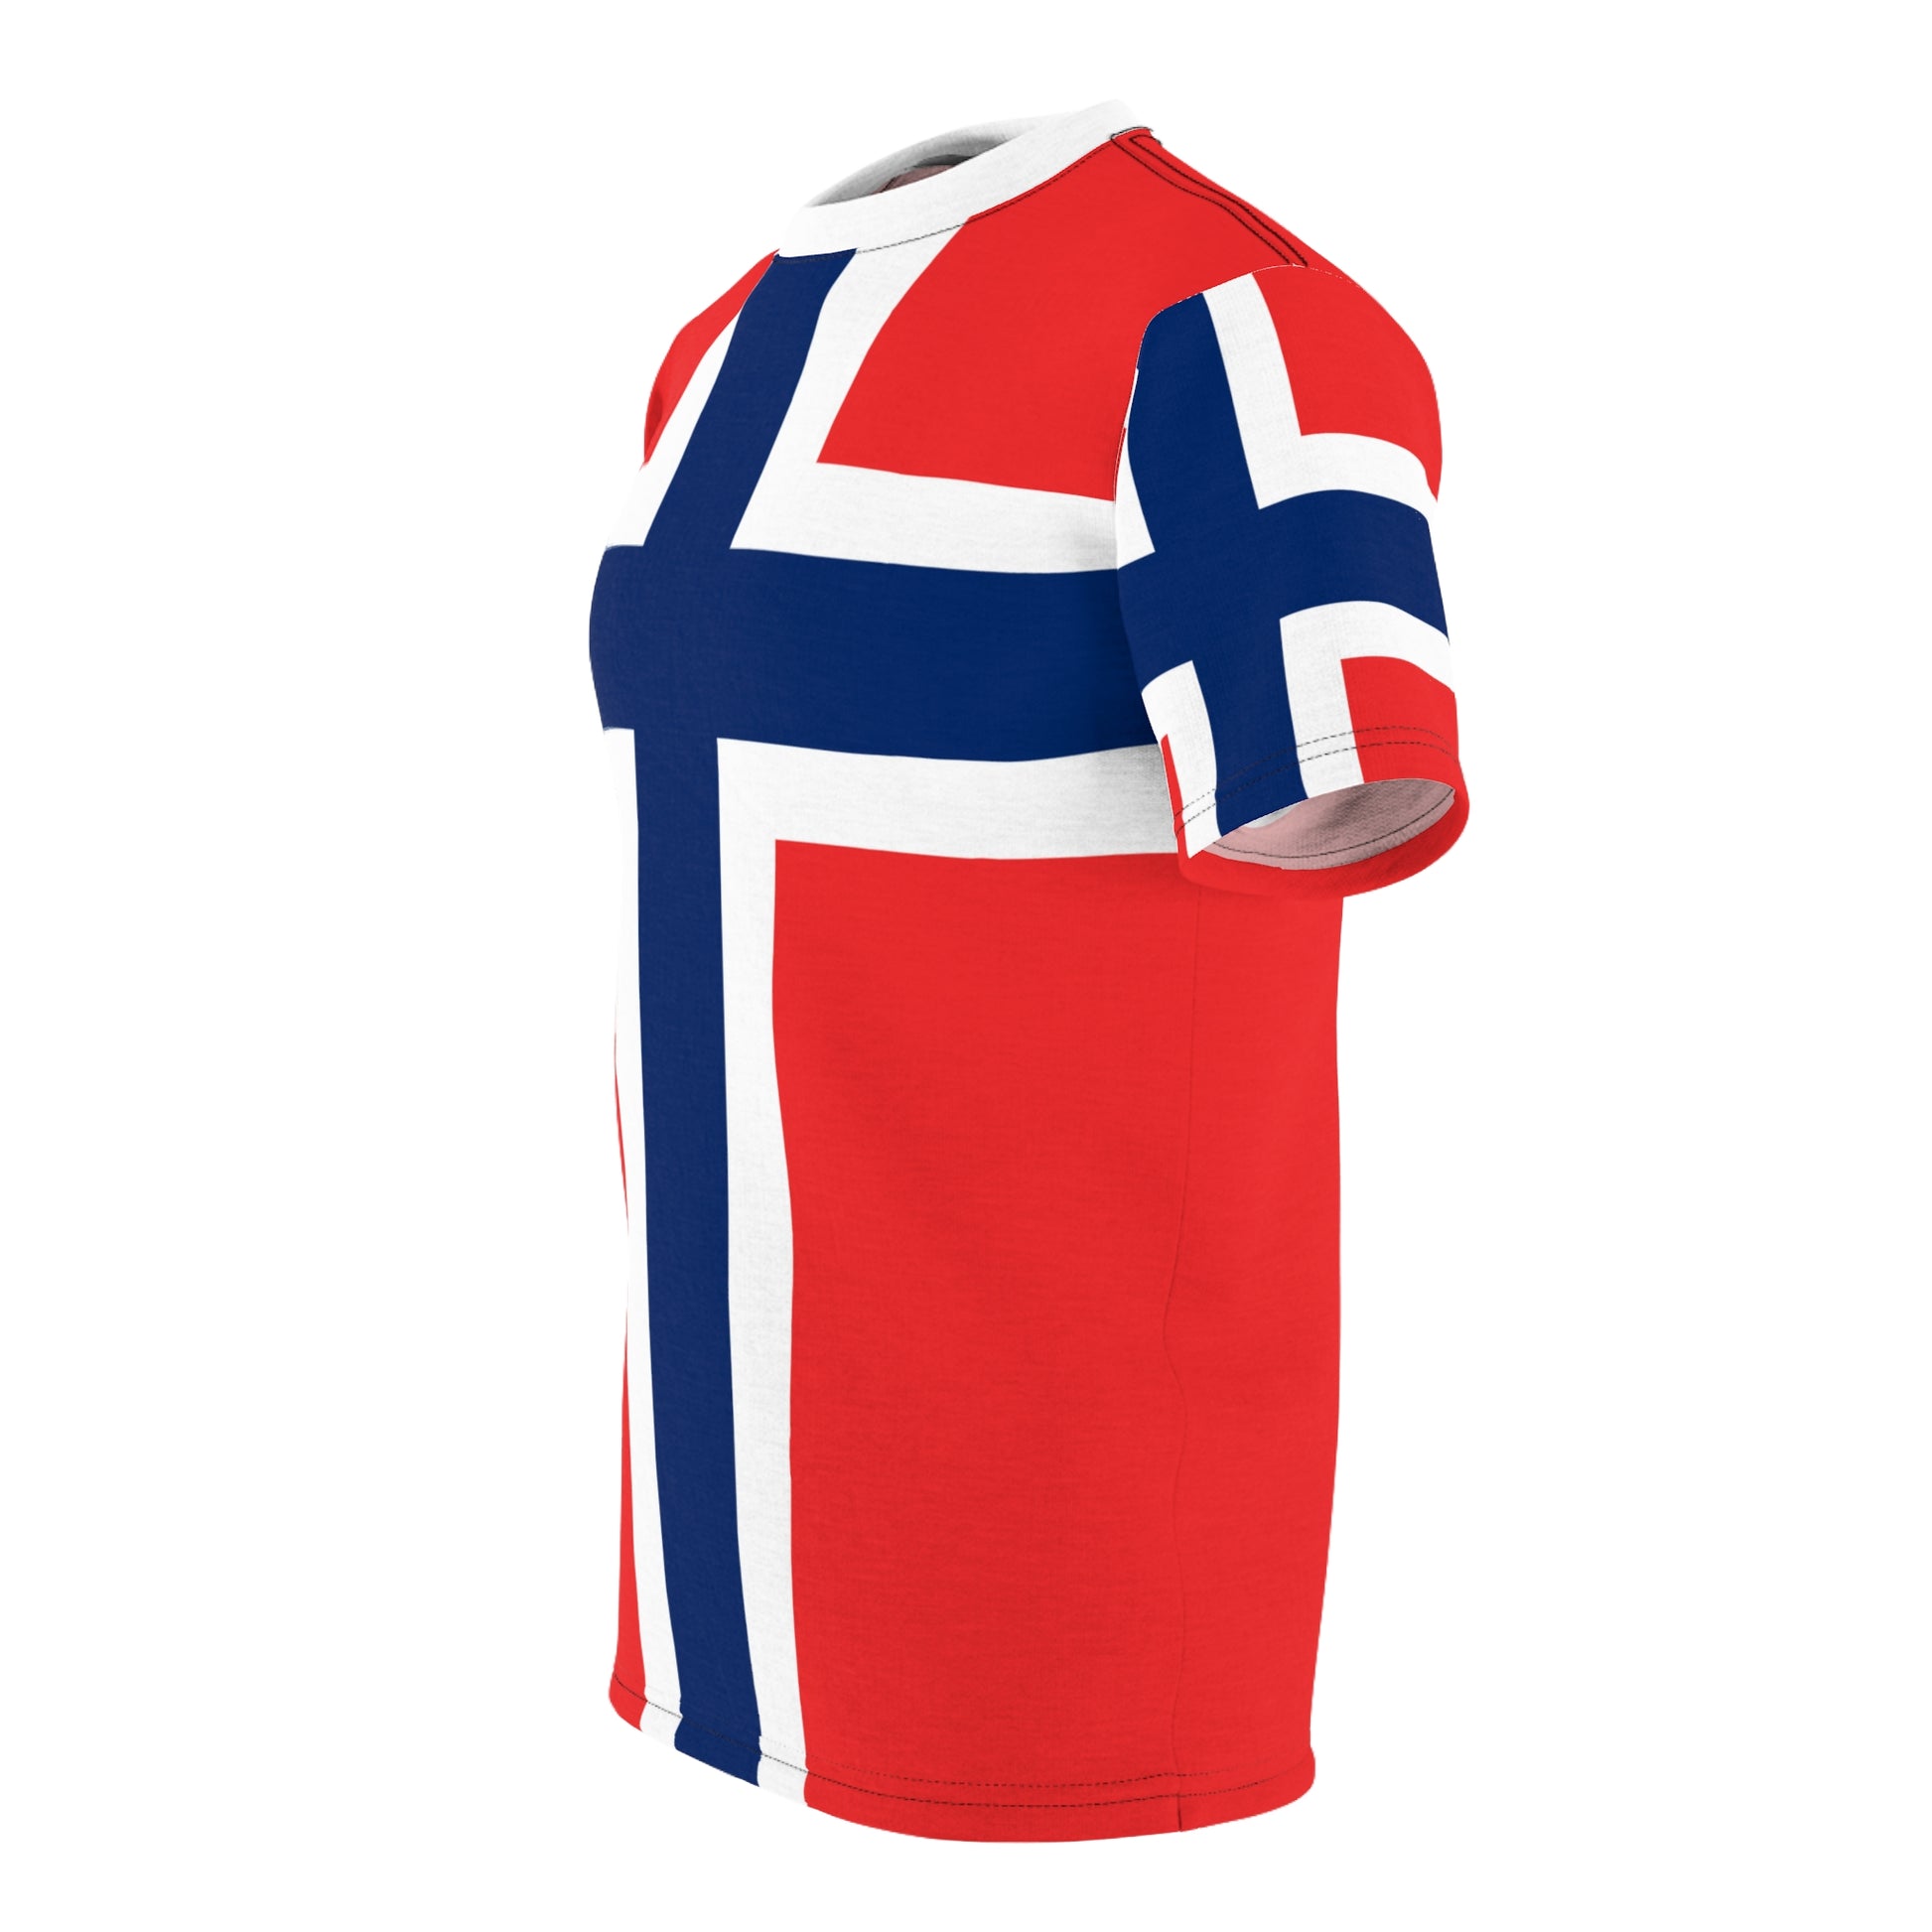 Norway Flag - International Country Flag Unisex Tee